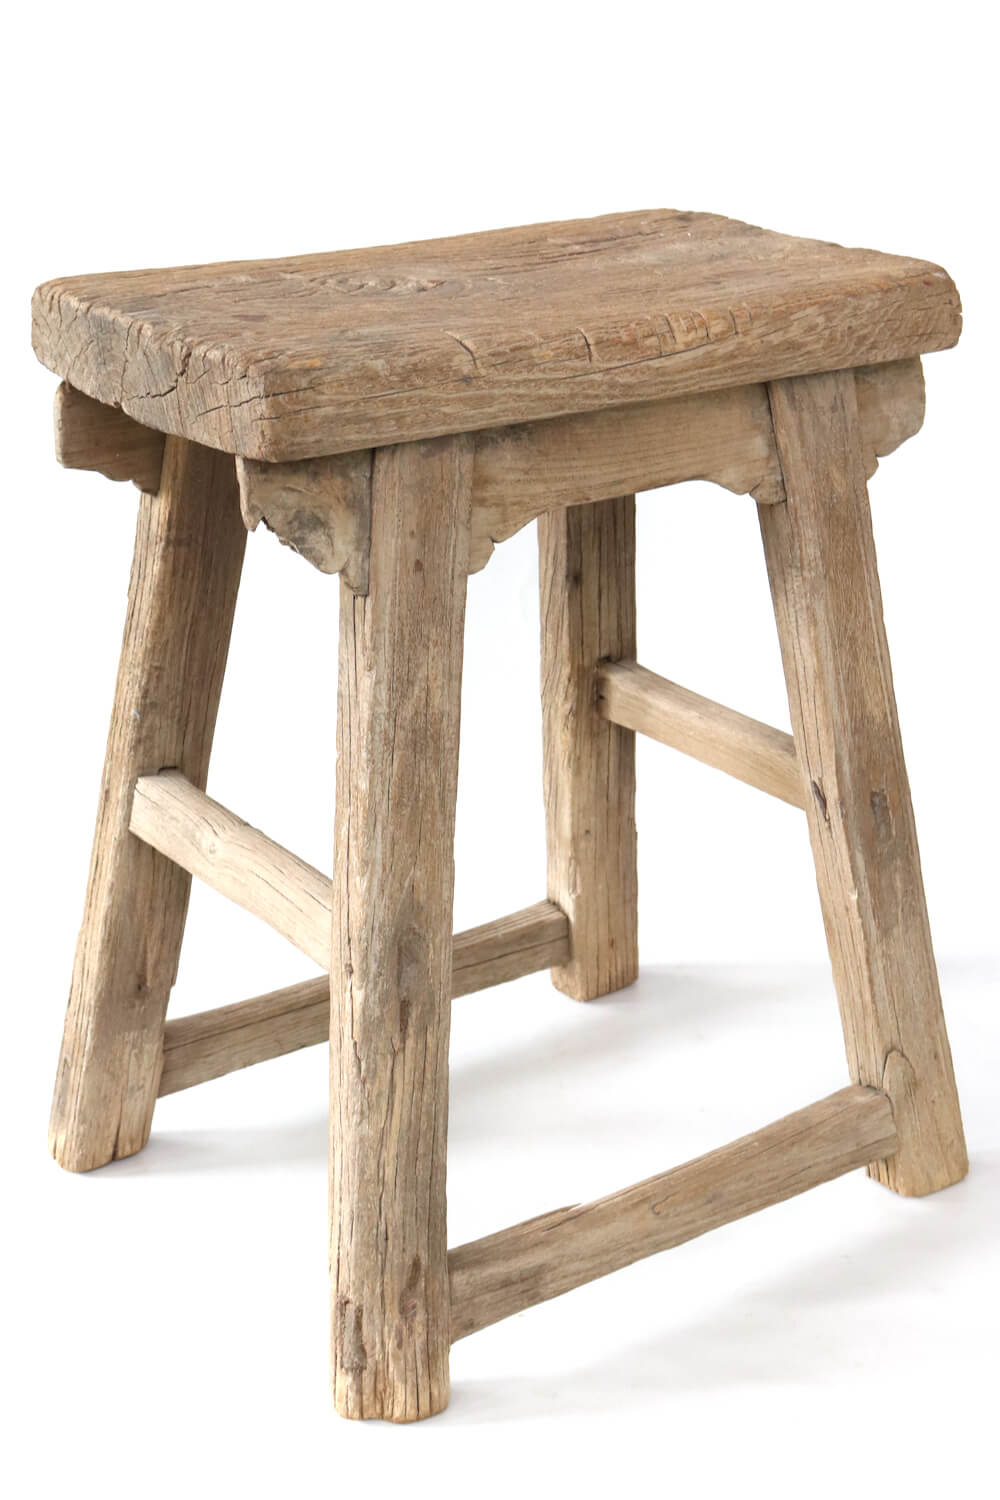 Hocker antik rustikal/ kleiner Tisch antik  